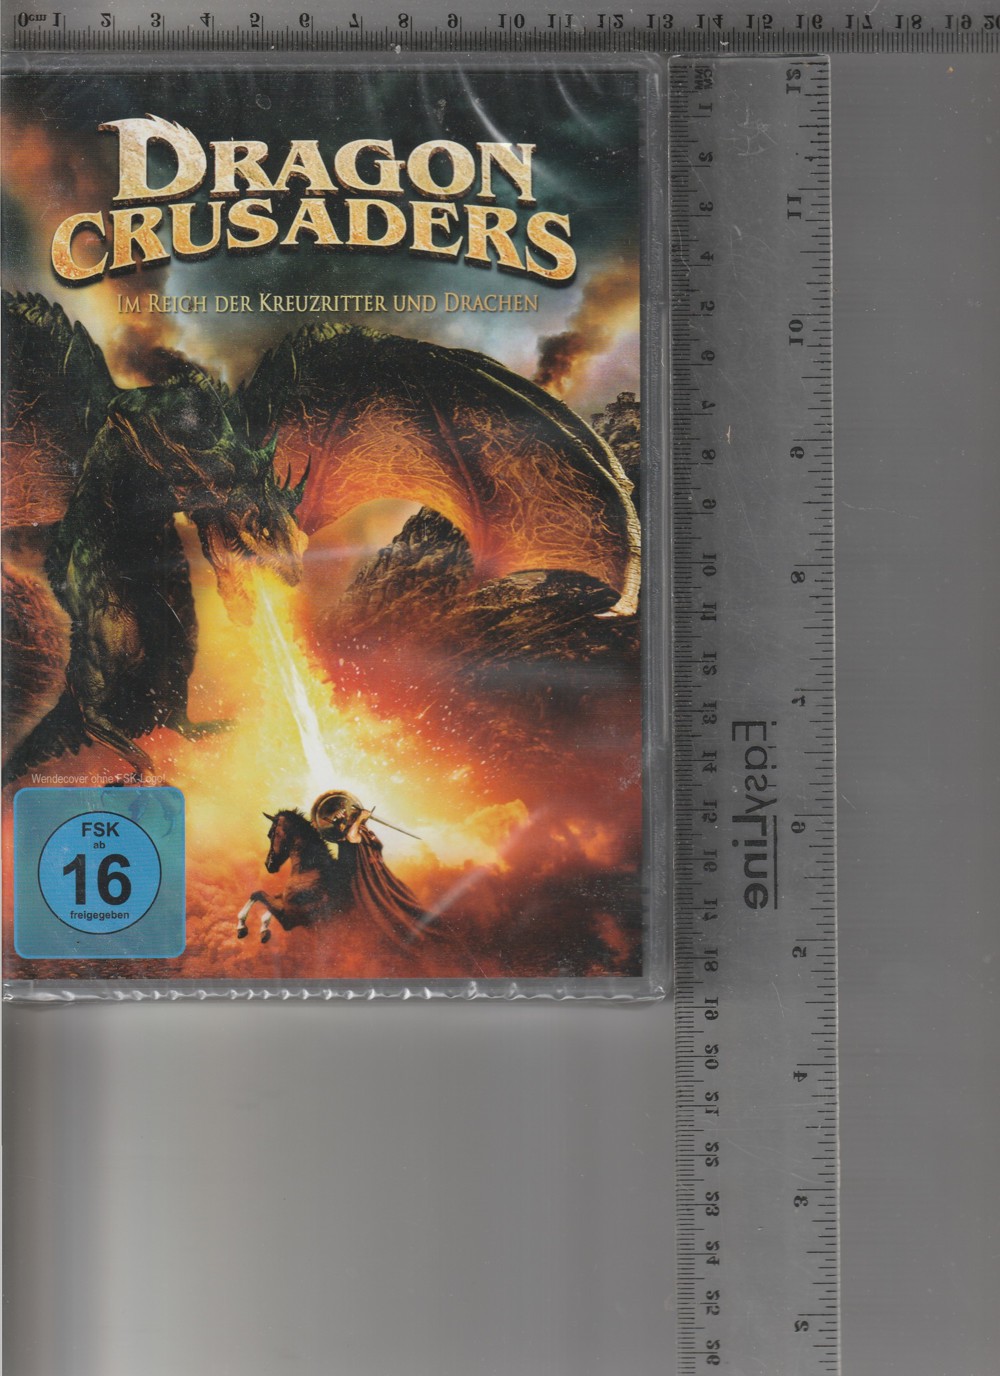  Dragon crusaders DVD